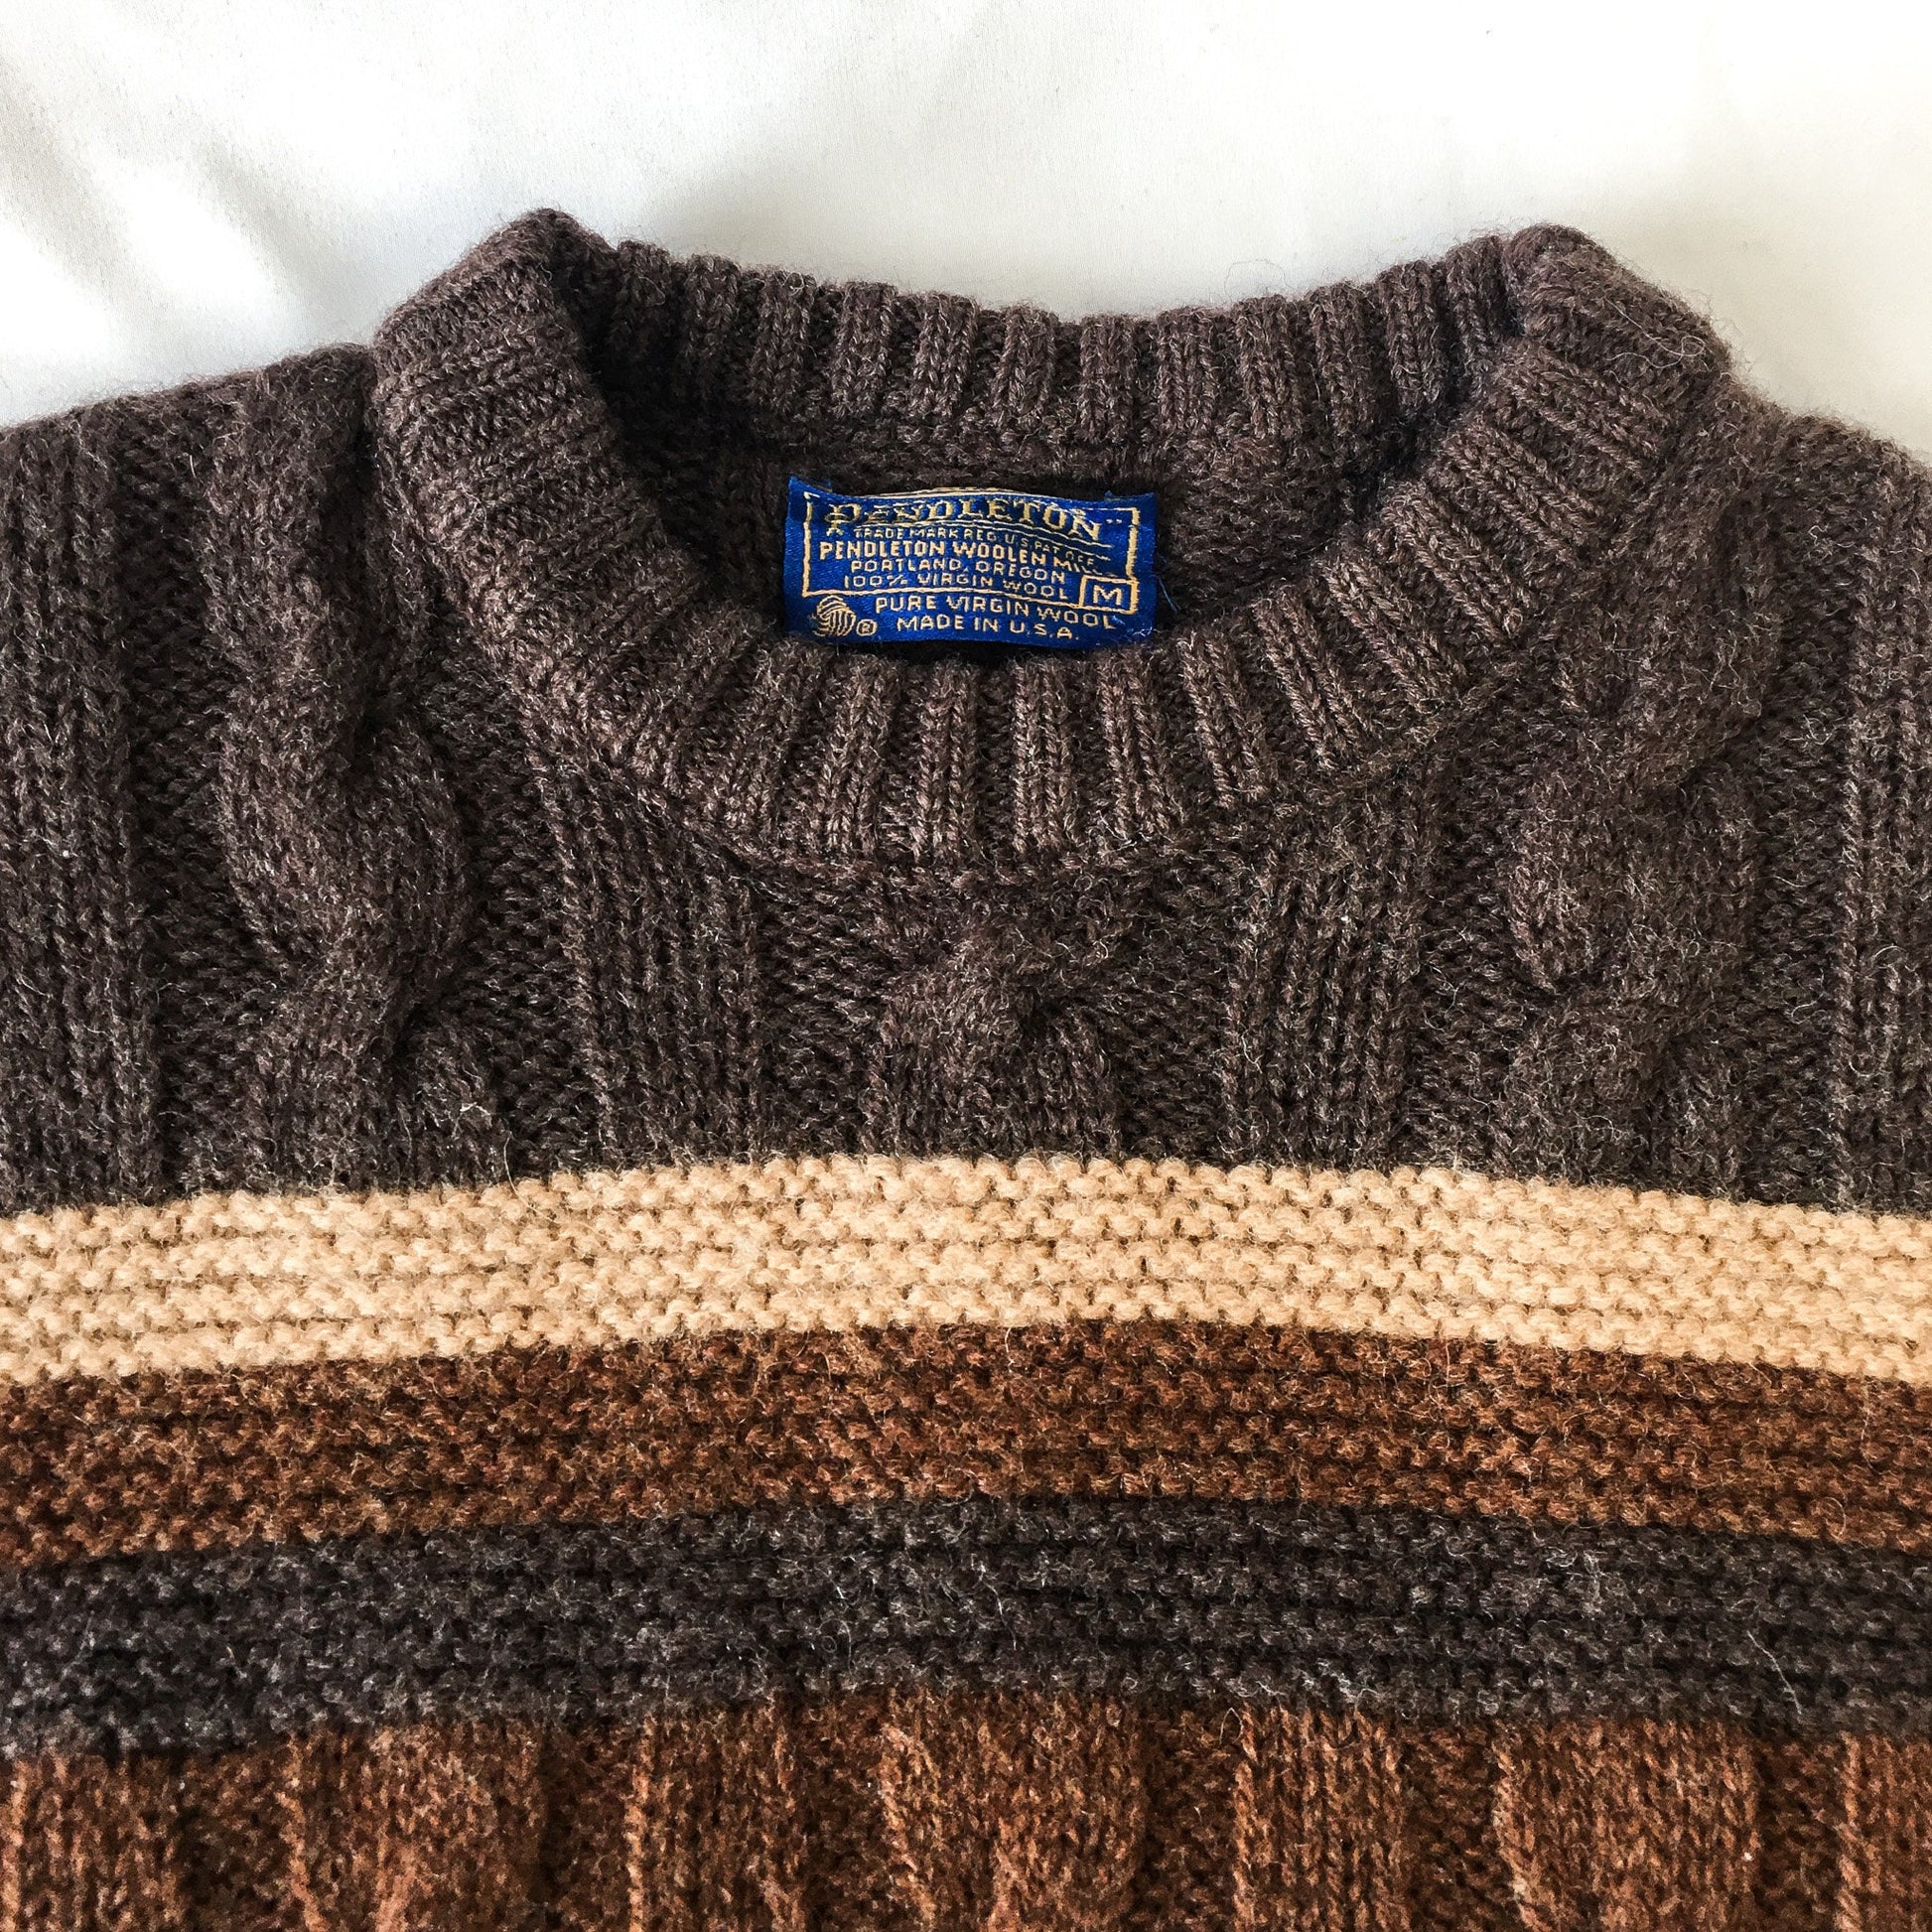 Vintage 70s Pendleton Brown Striped Knit Wool Sweater, Women's, Sz. M, 70s Pure Wool Sweater